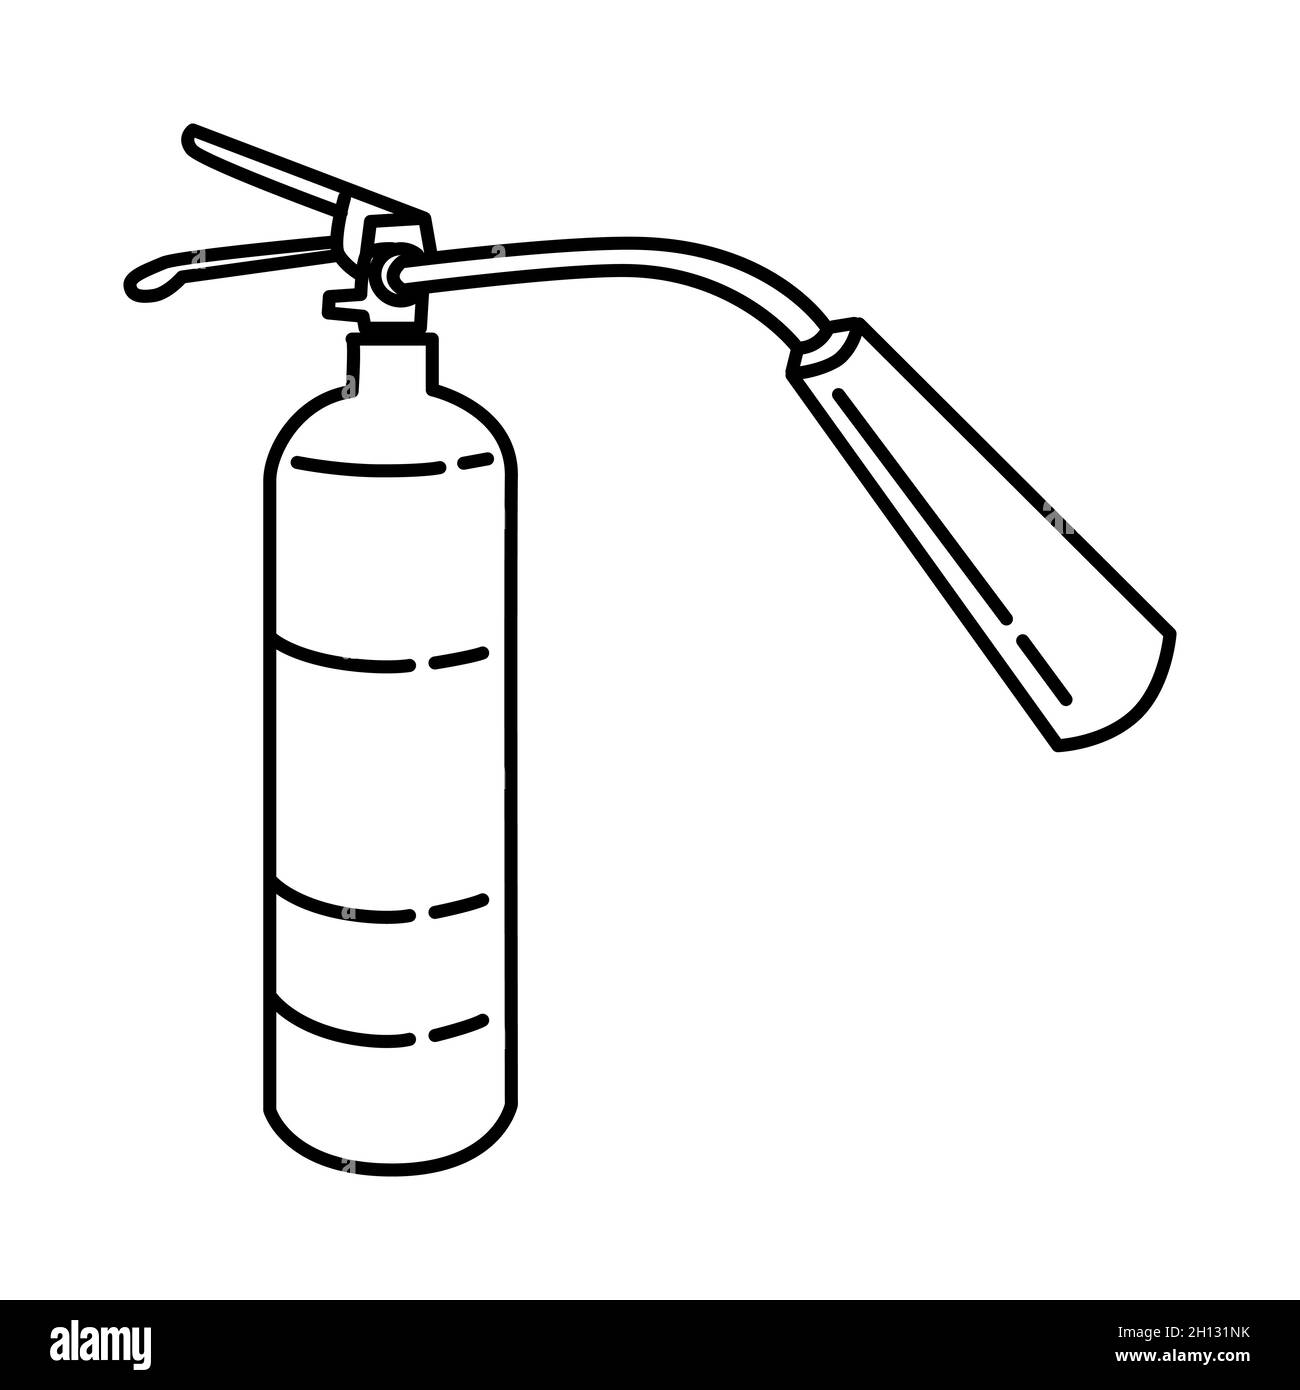 Fire Extinguisher Sketch Vector Images (over 460)